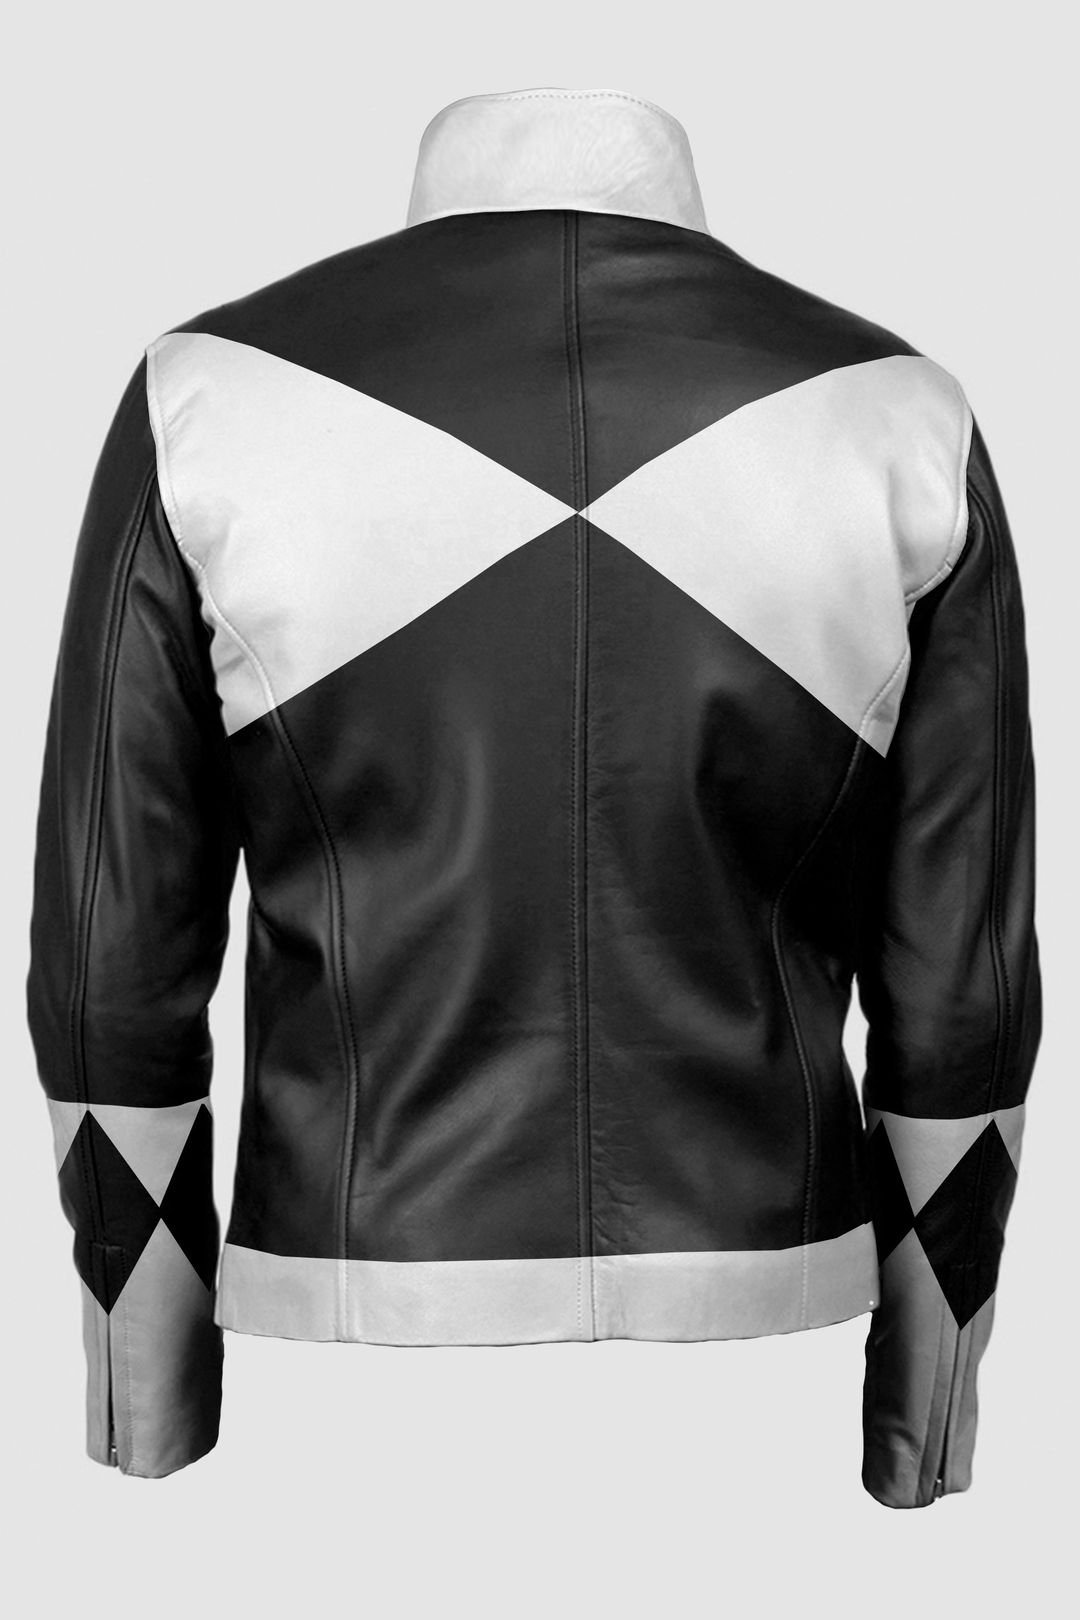 Power-Rangers-Classic-Leather-Black-Jackets.jpg